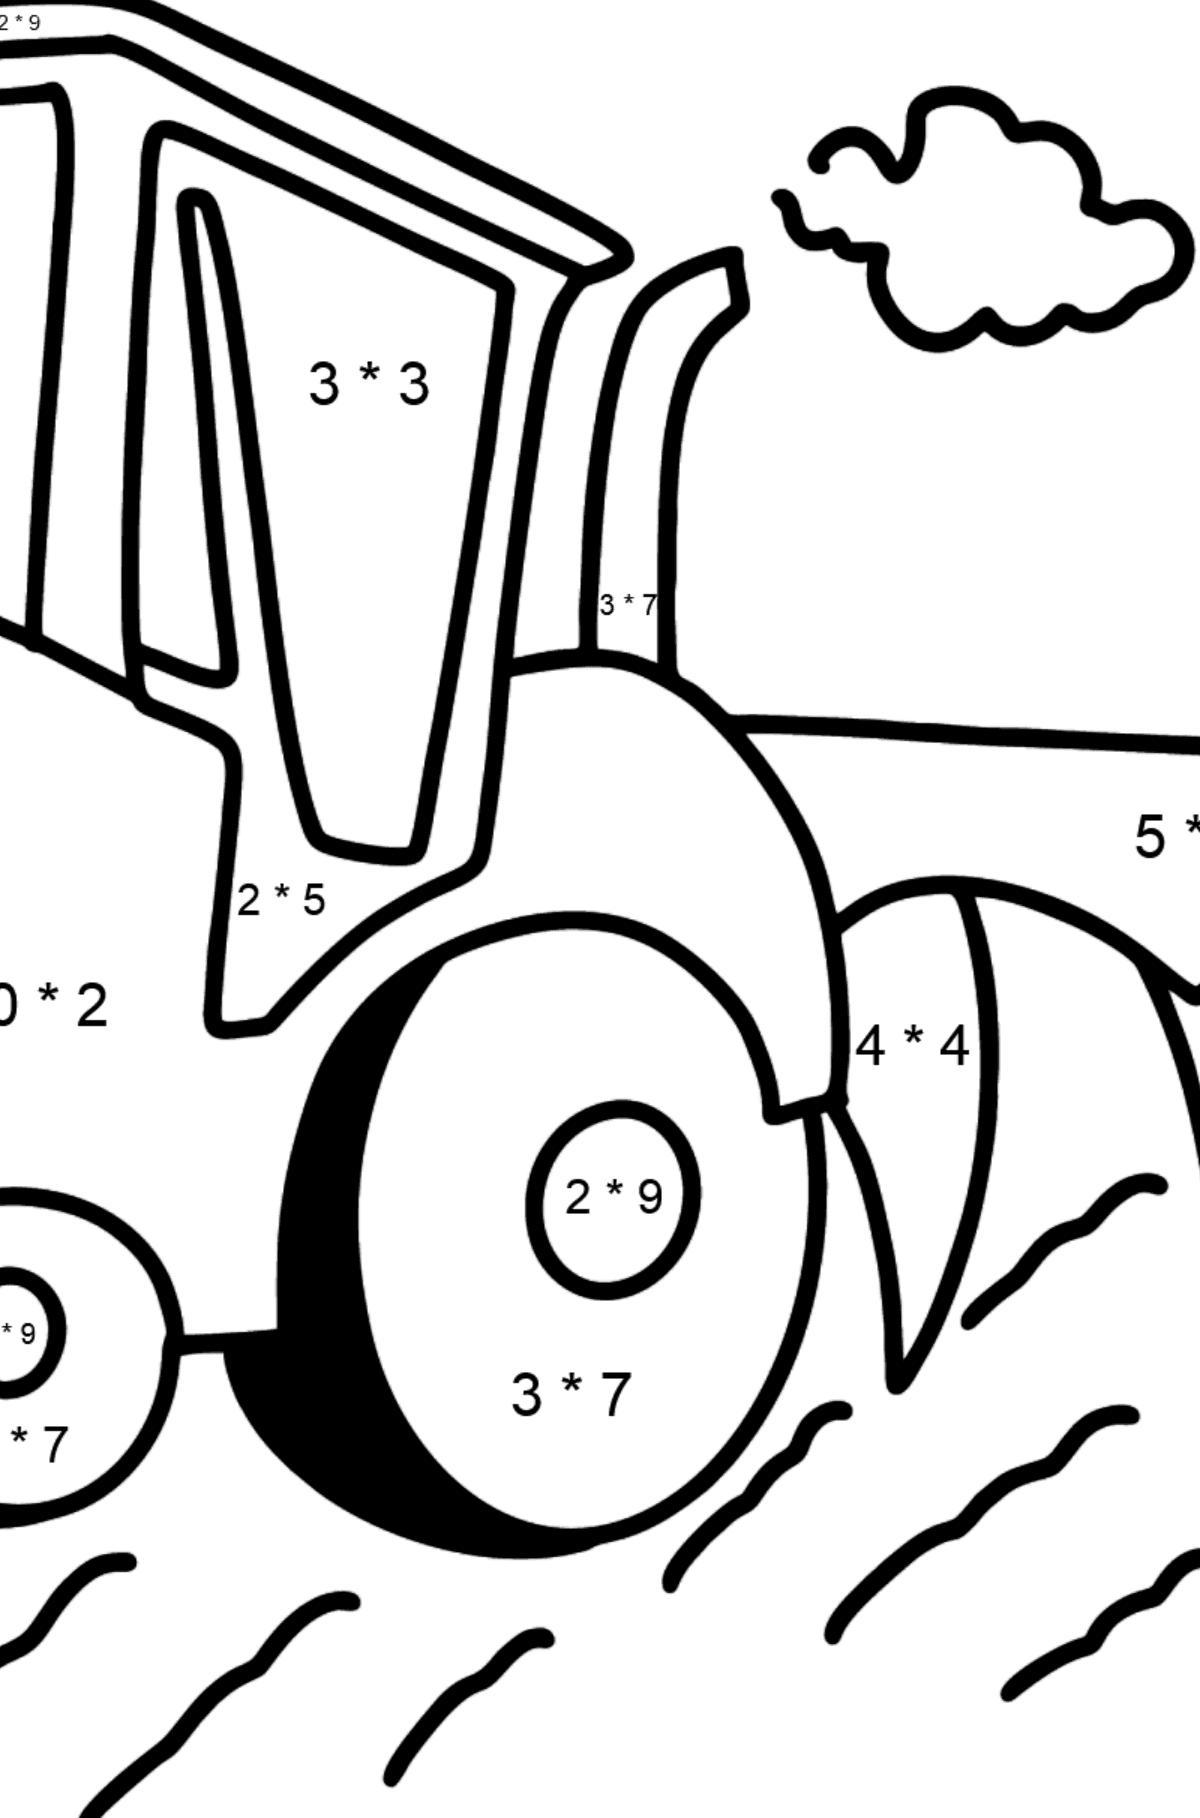 Ausmalbild Traktor mit Pflug - Mathe Ausmalbilder - Multiplikation für Kinder